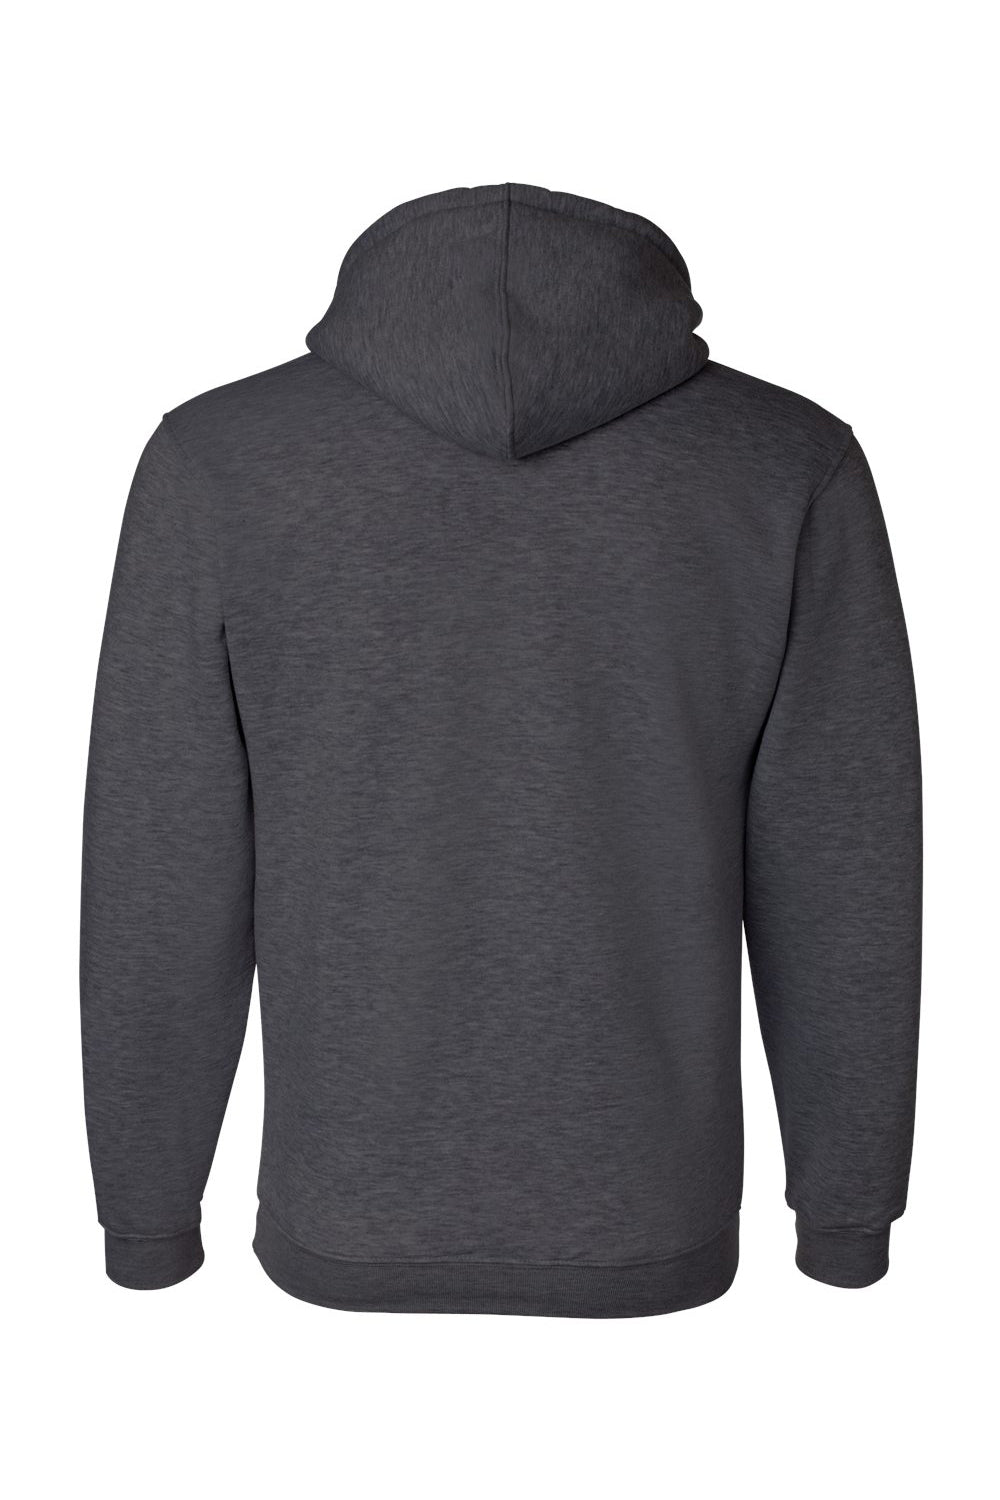 Bayside BA960 Mens USA Made Hooded Sweatshirt Hoodie Heather Charcoal Grey Flat Back